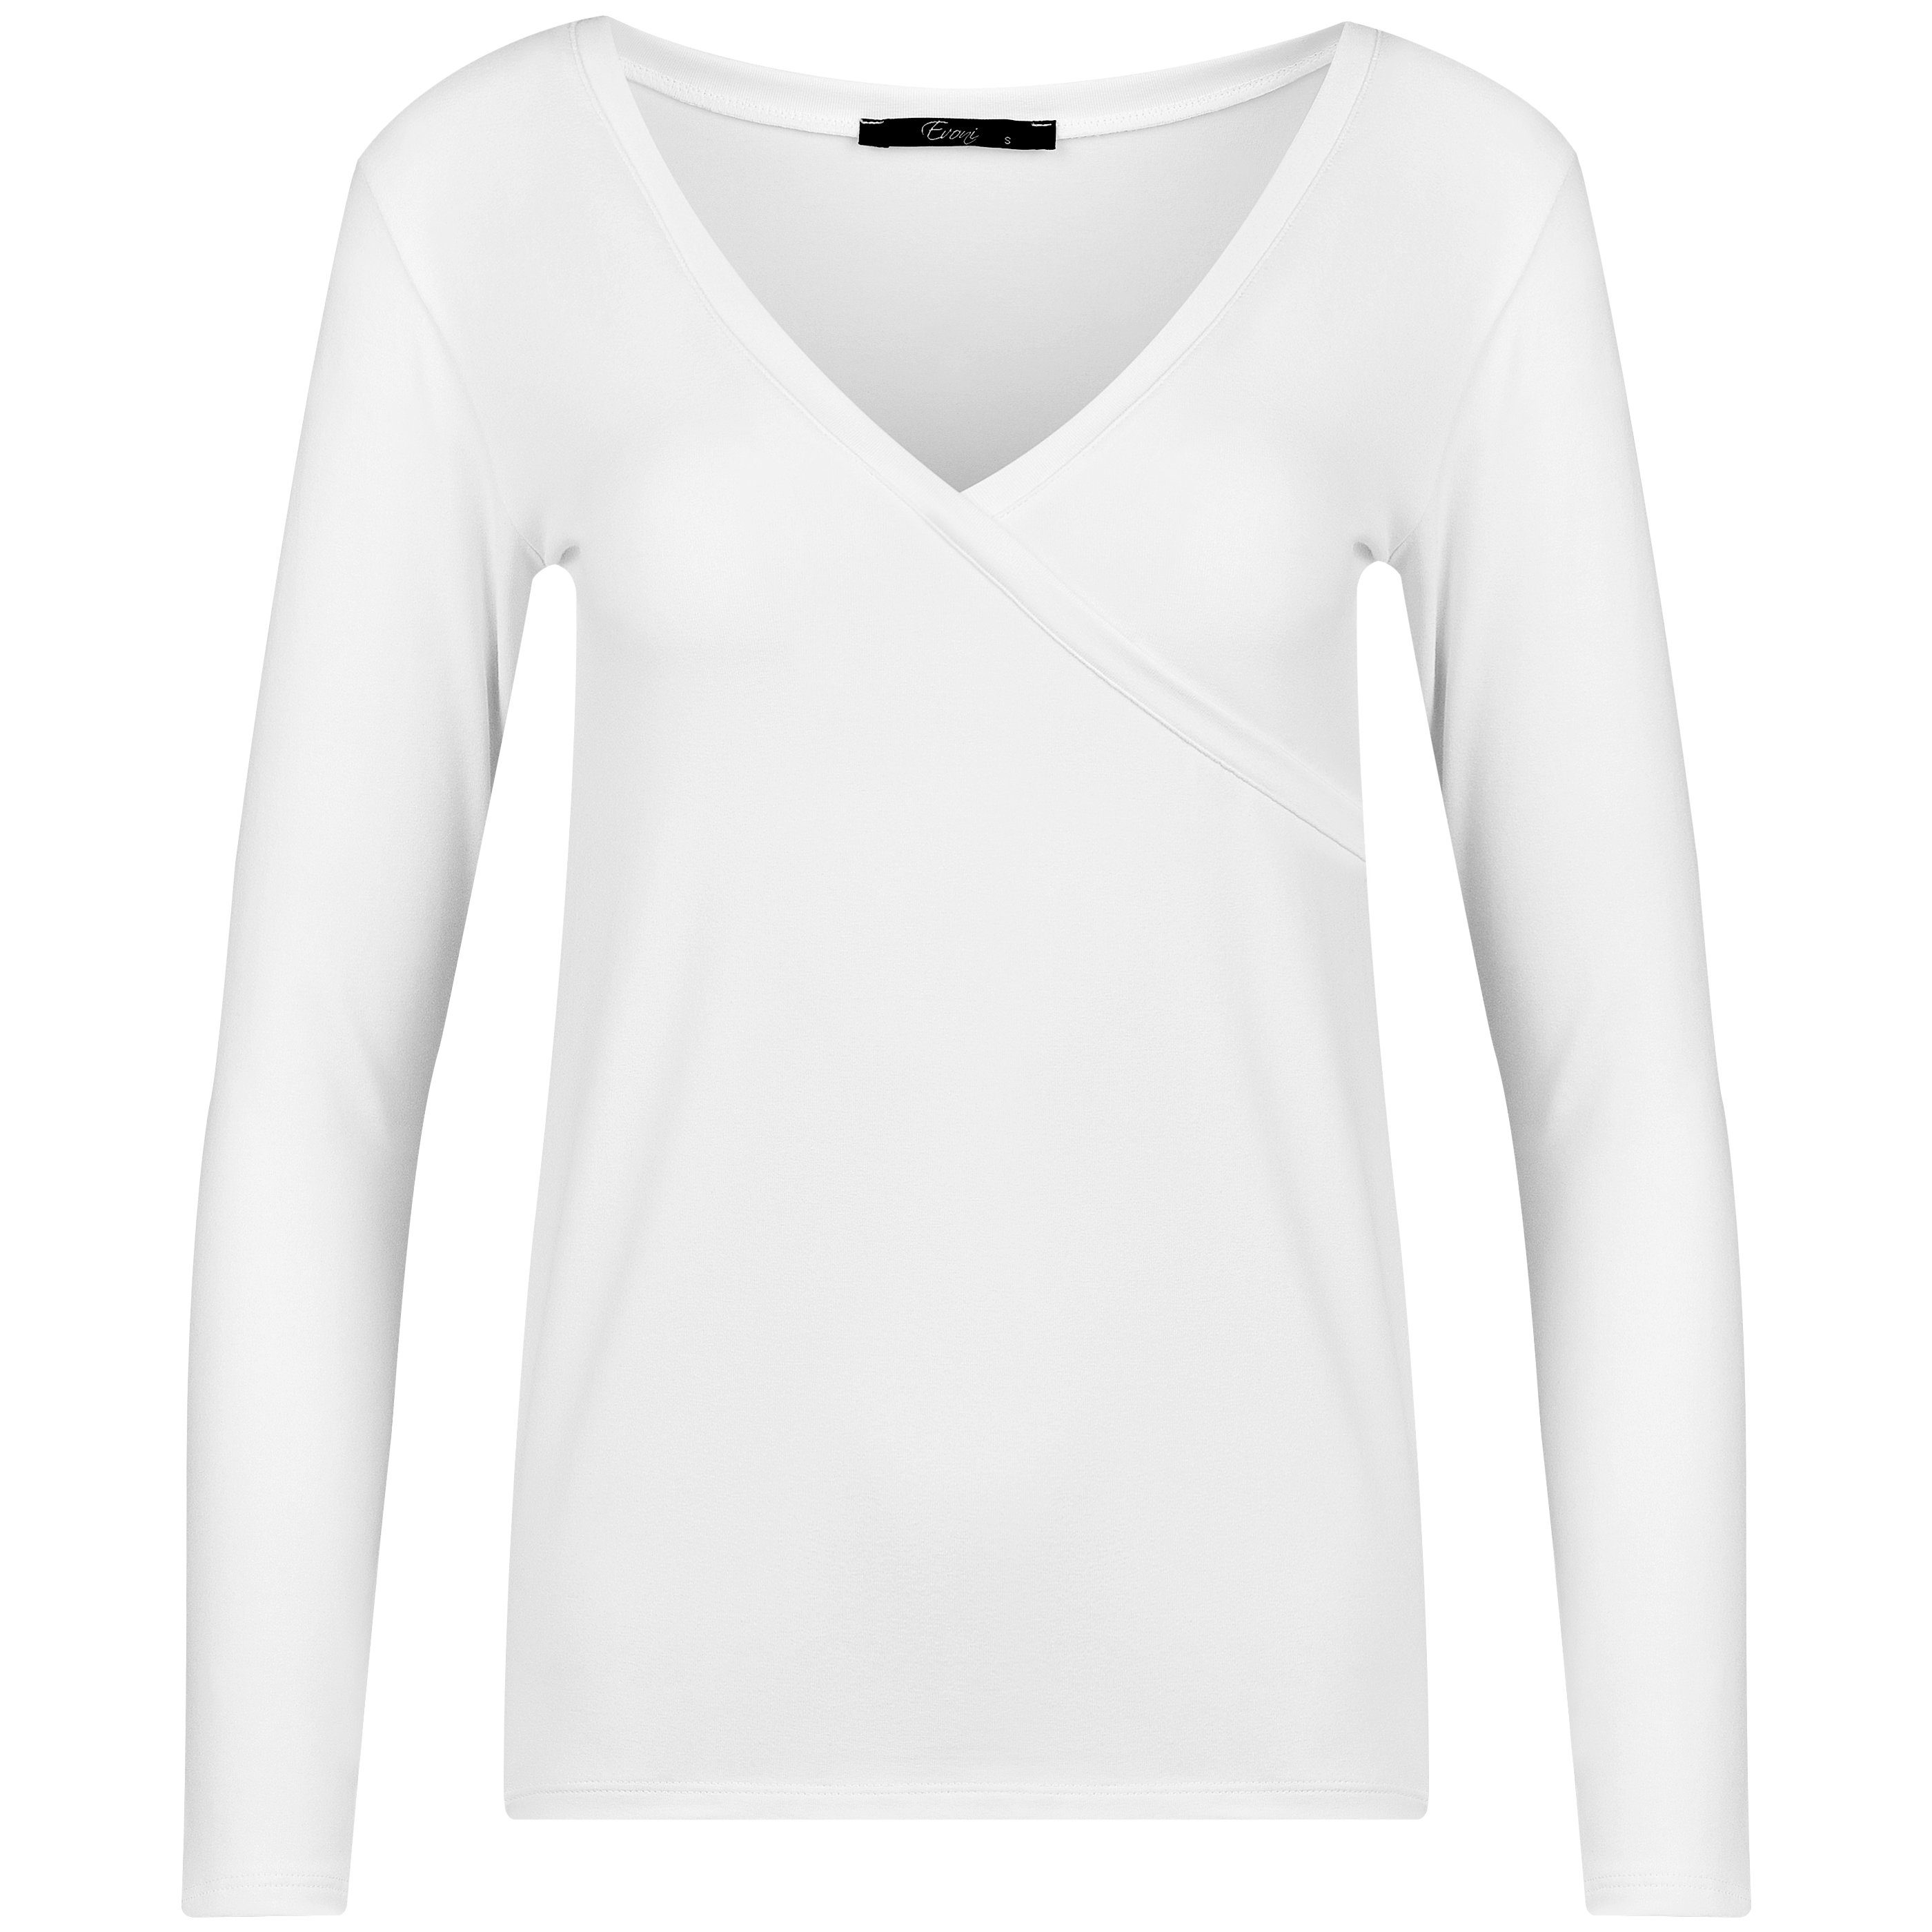 Evoni Langarmshirt Damen Basic Shirt Langarm Baumwolle mit V-Ausschnitt weiß